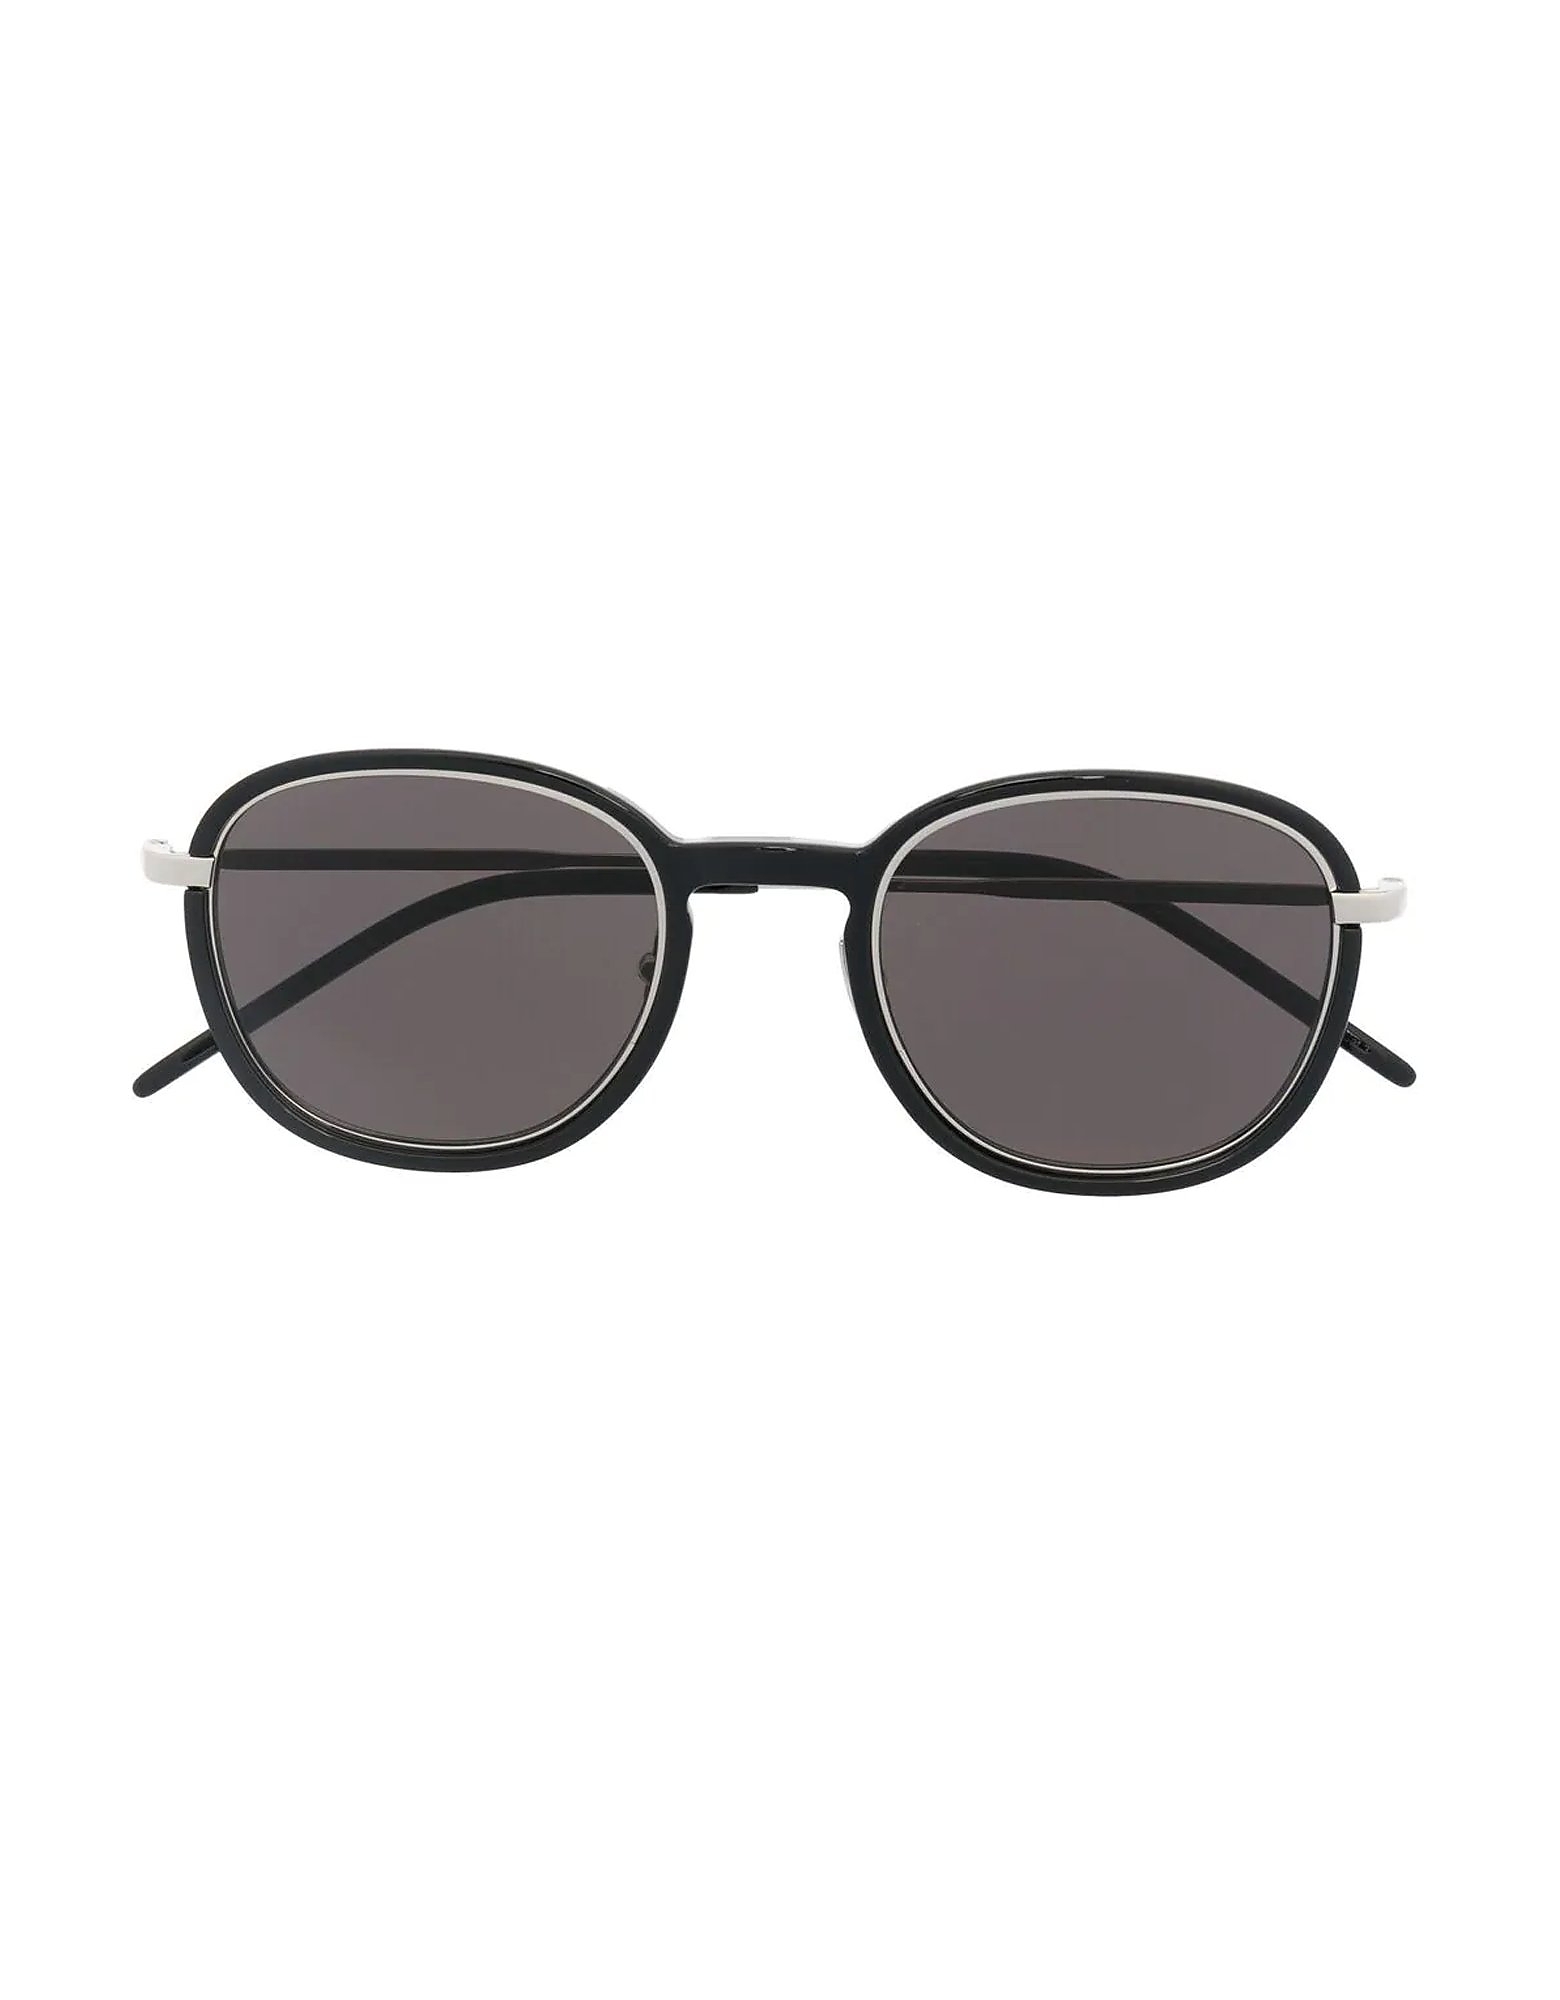 Saint Laurent Sunglasses Black Acetate and Metal Unisex Sunglasses